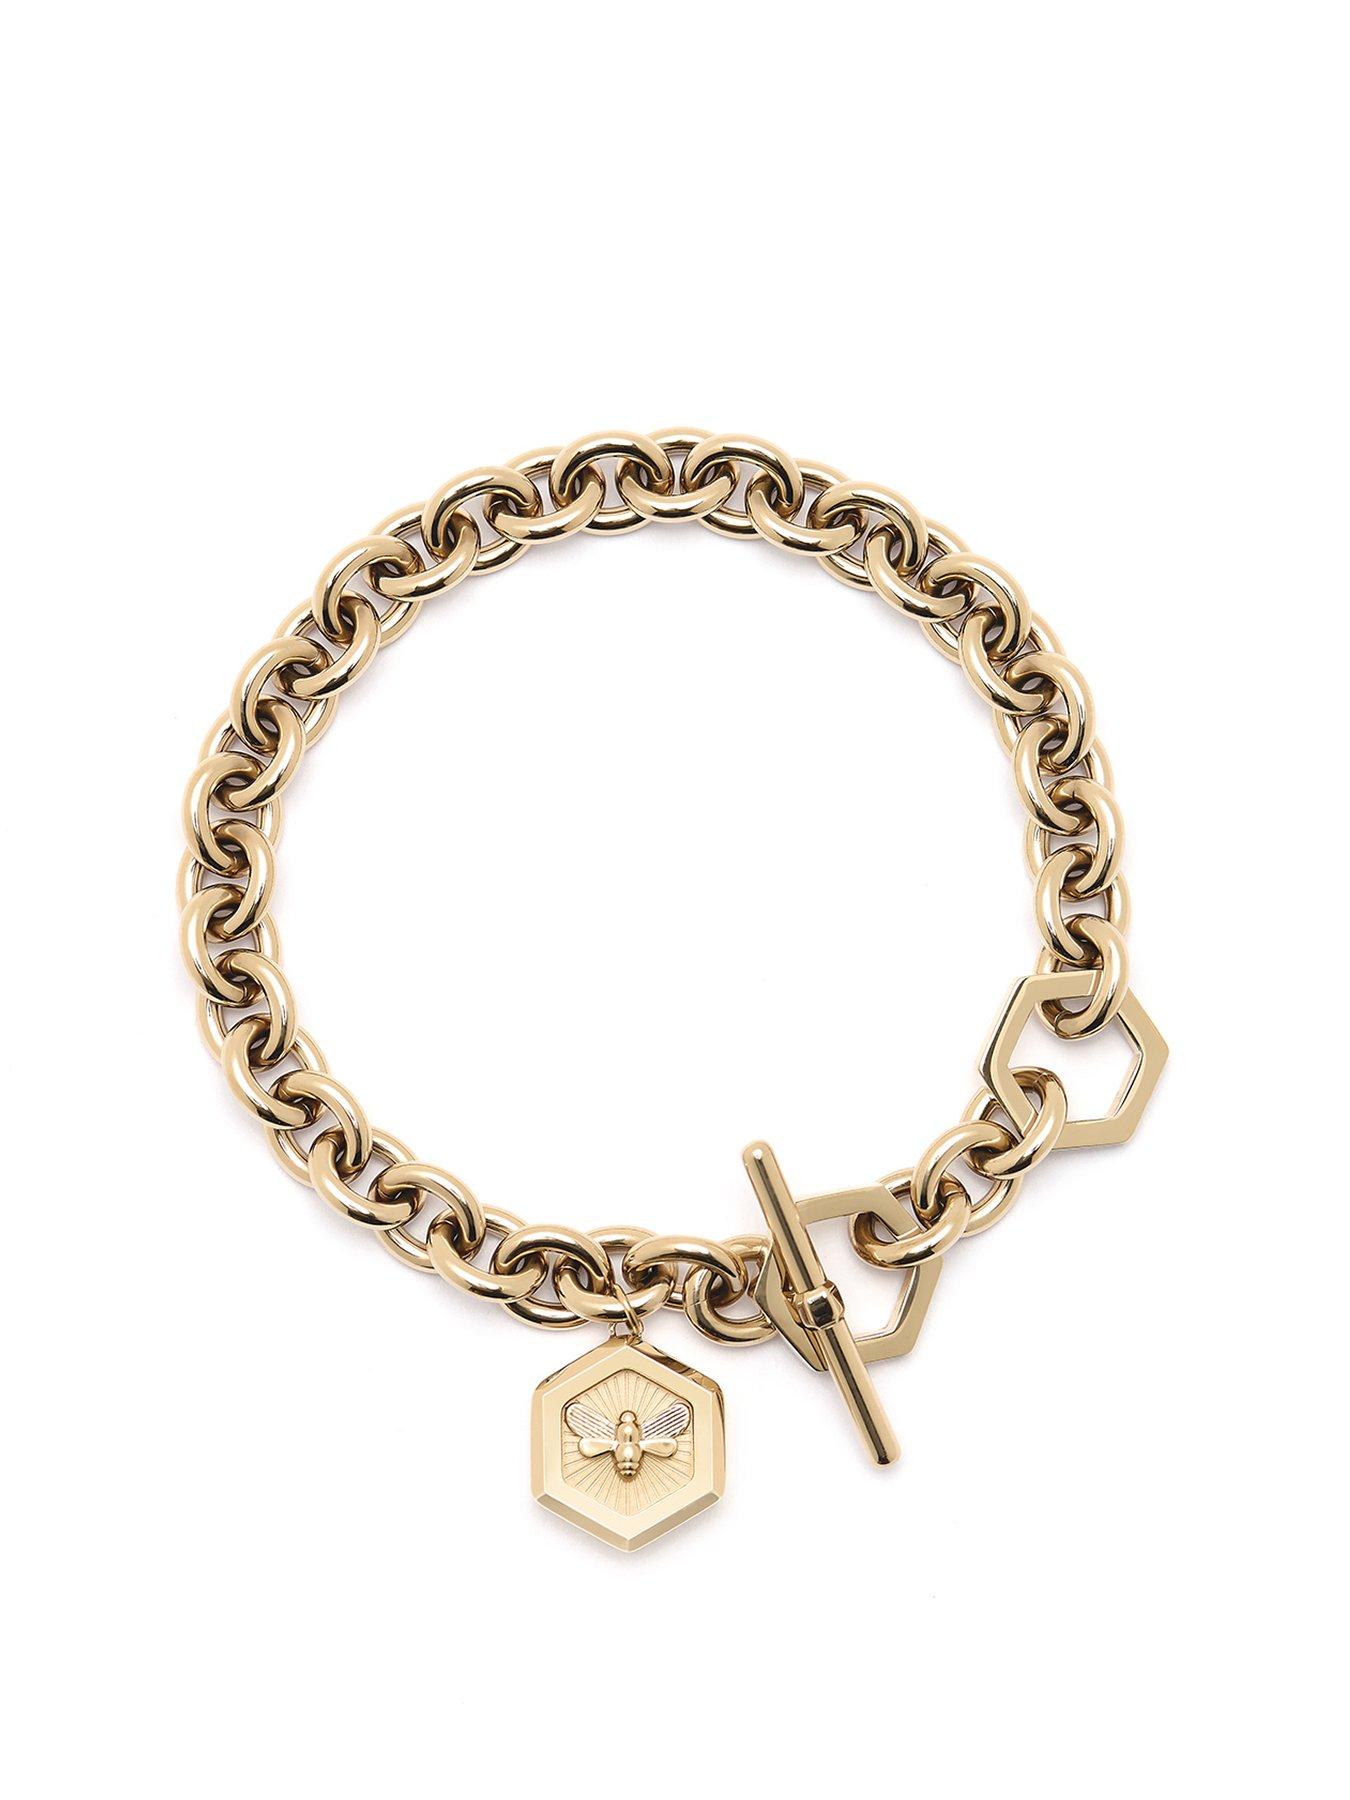 Buy Clover U Type Iron Ireland St.Patrick's Day Heart Chain Bracelet  Jewelry Charm Fashion at Amazon.in